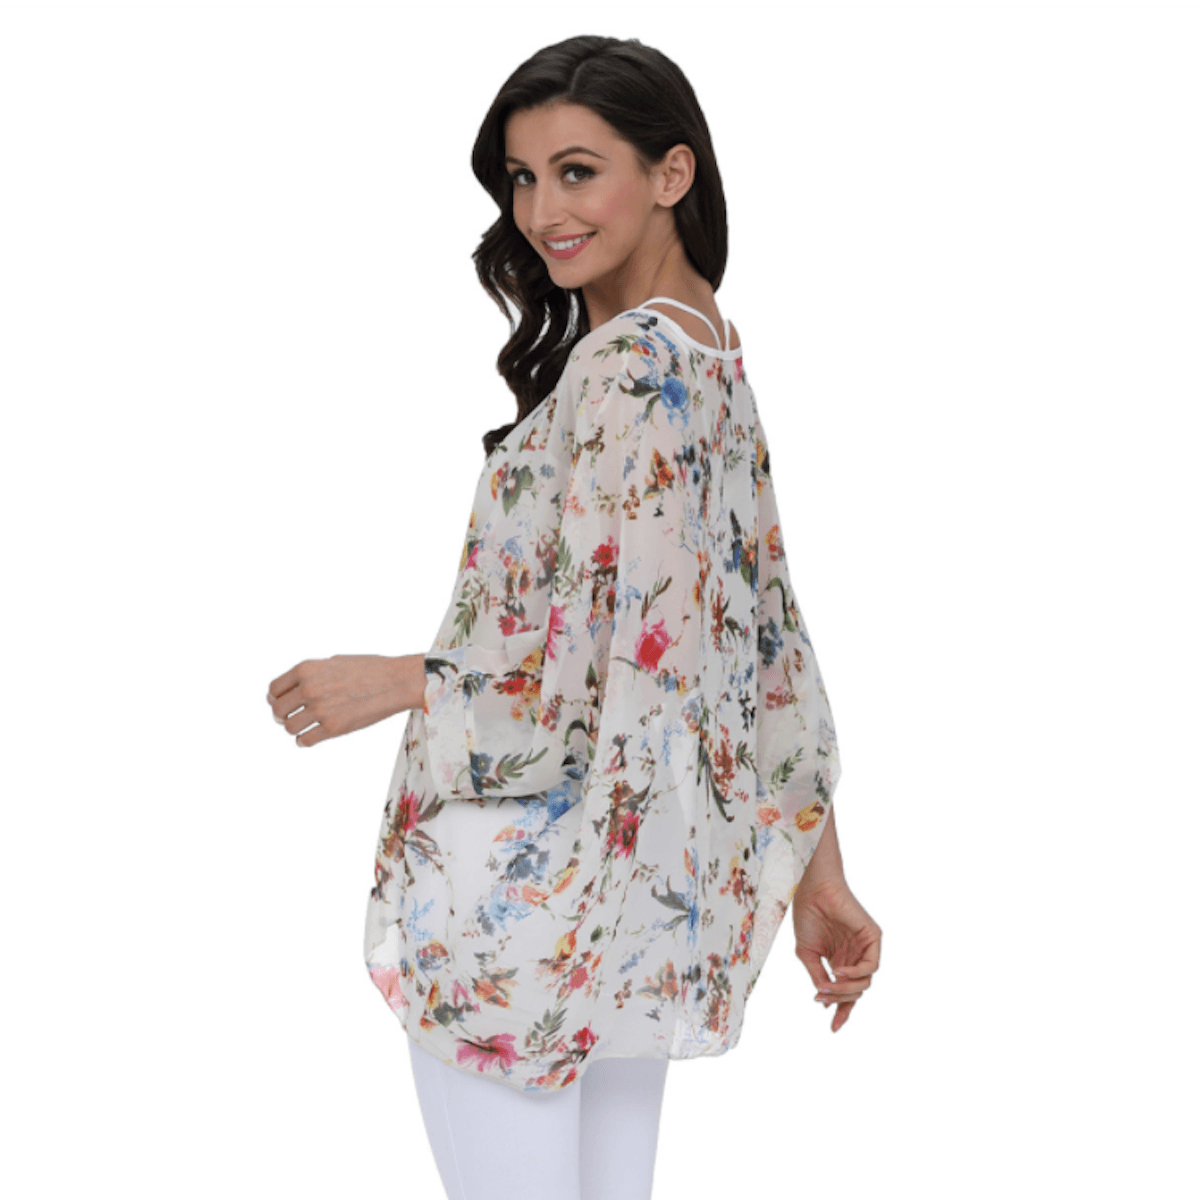 Women's Shirts Womens Summer Floral Print Chiffon Tunic Top